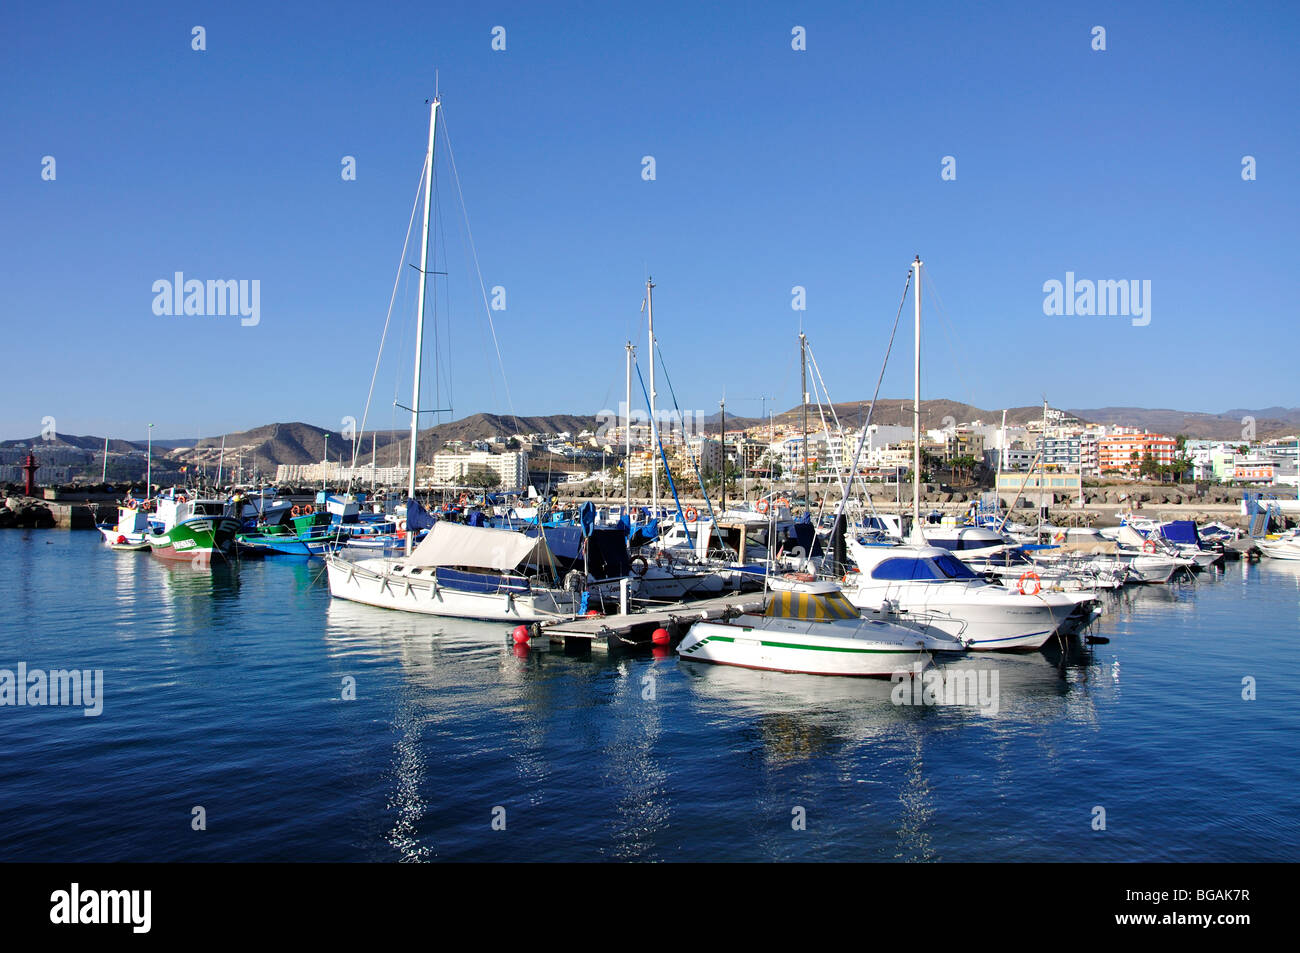 Boats in harbour, Puerto de Arguineguin, Arguineguin, Mogan Municipality, Gran Canaria, Canary Islands, Spain Stock Photo